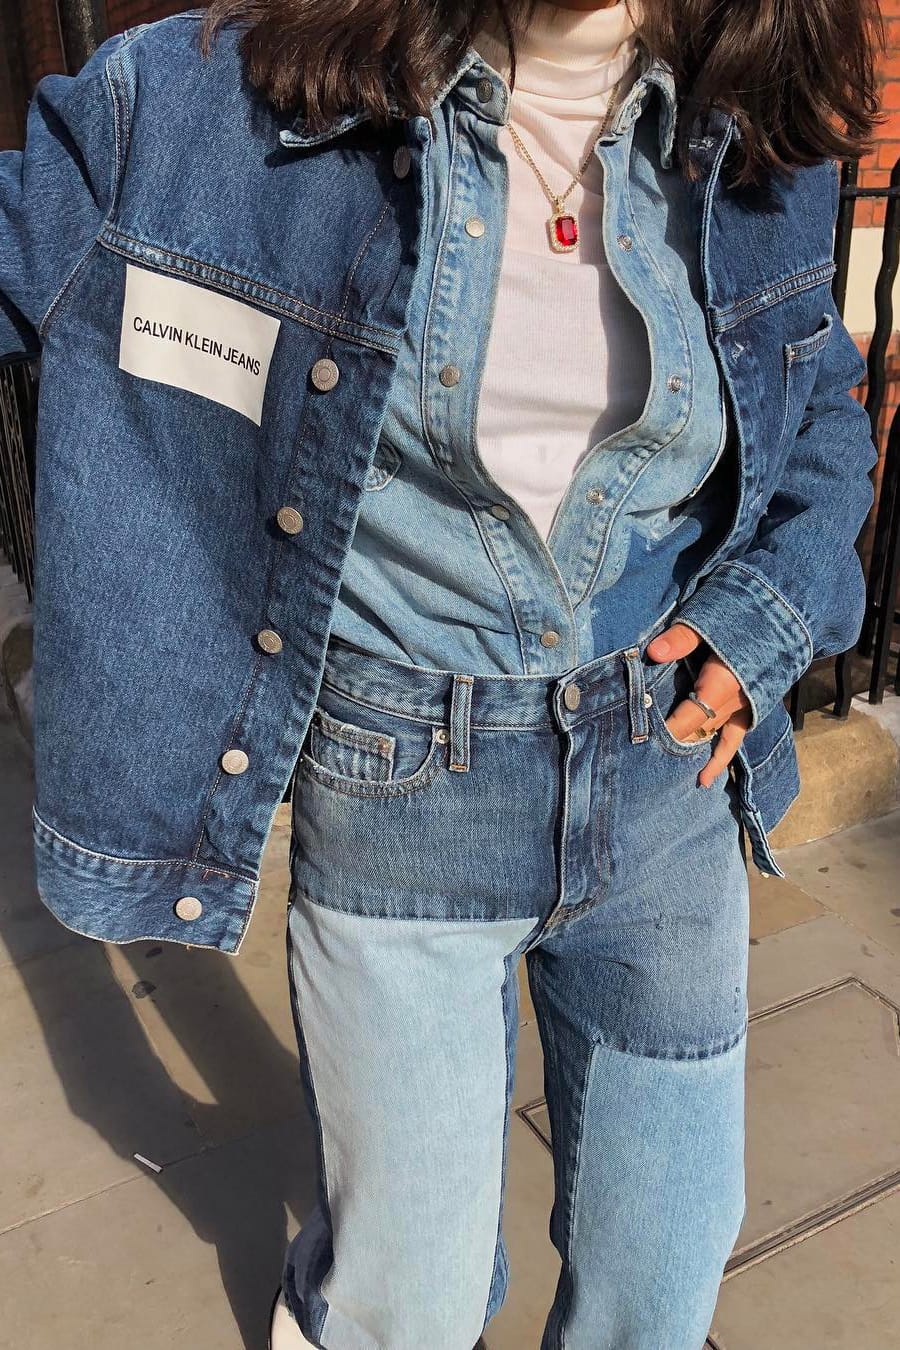 new jeans jacket 2018